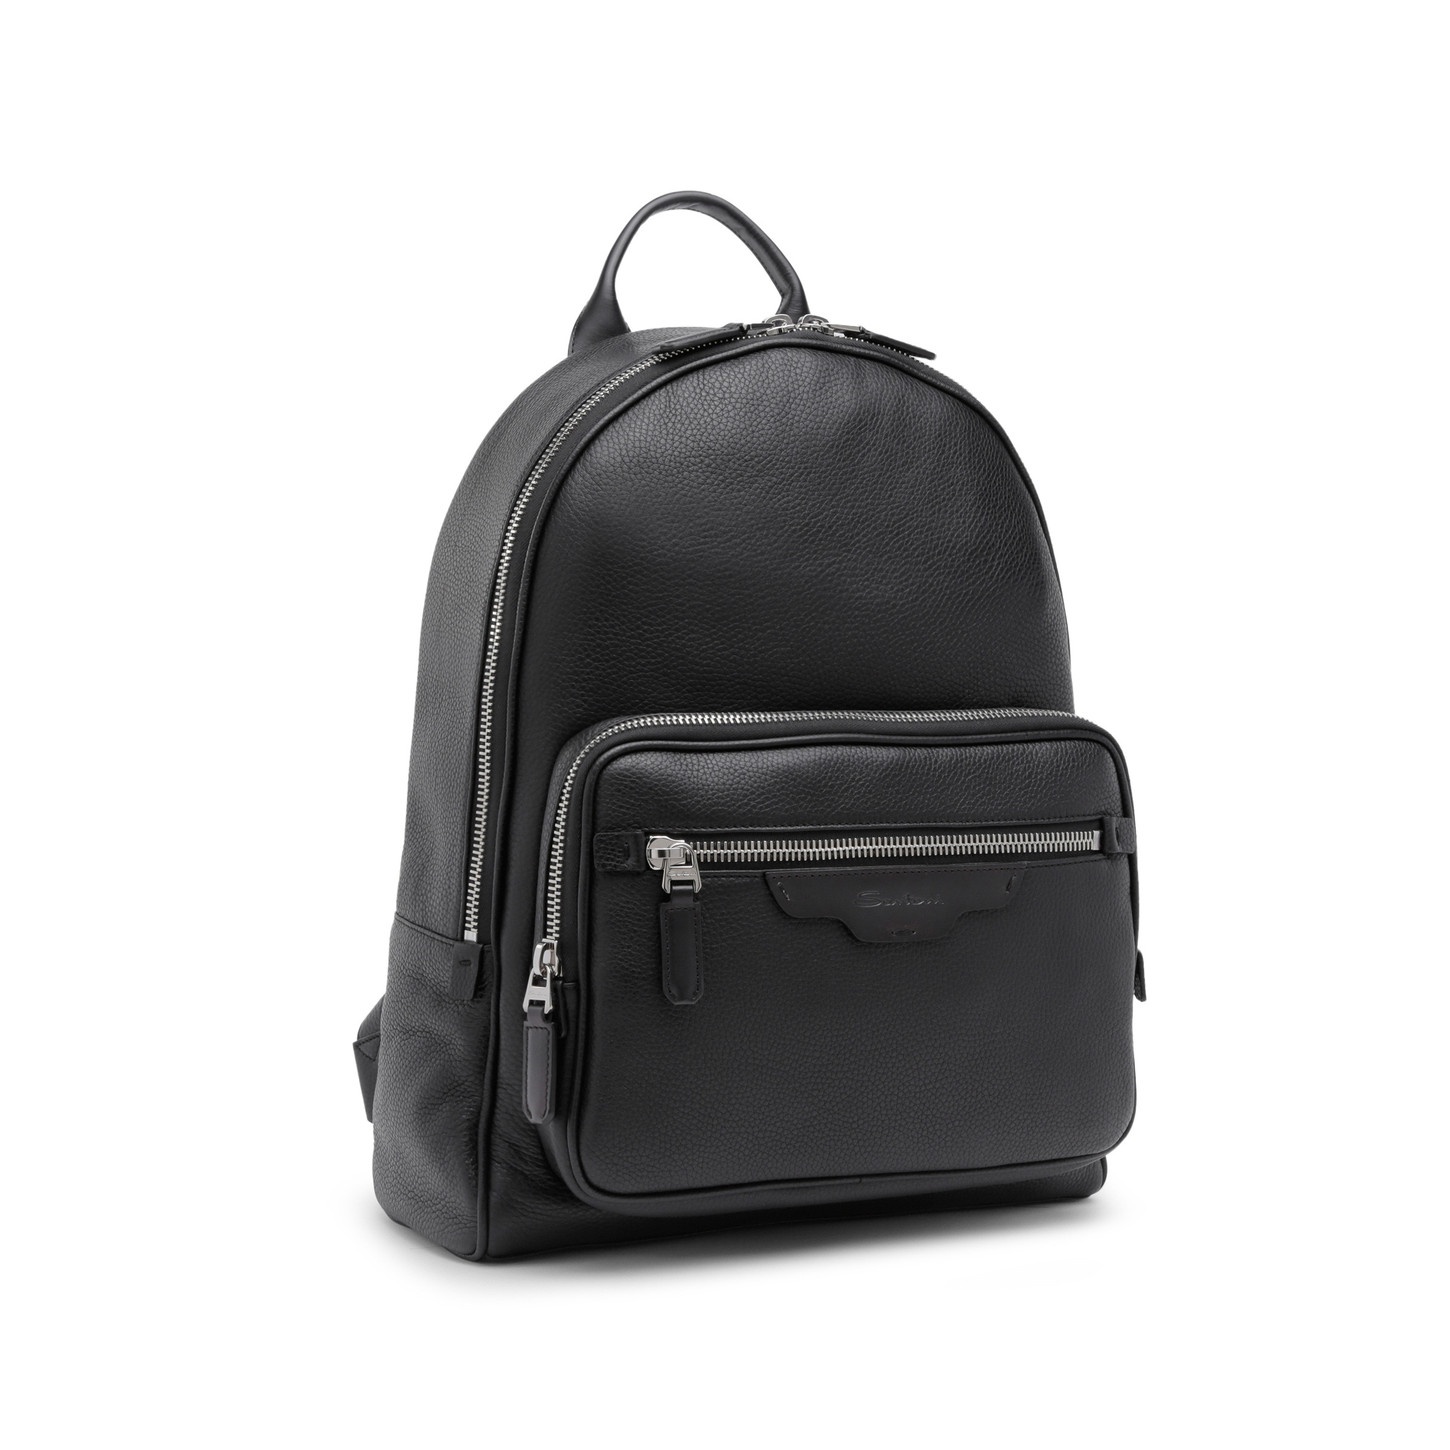 Black tumbled leather backpack - 6